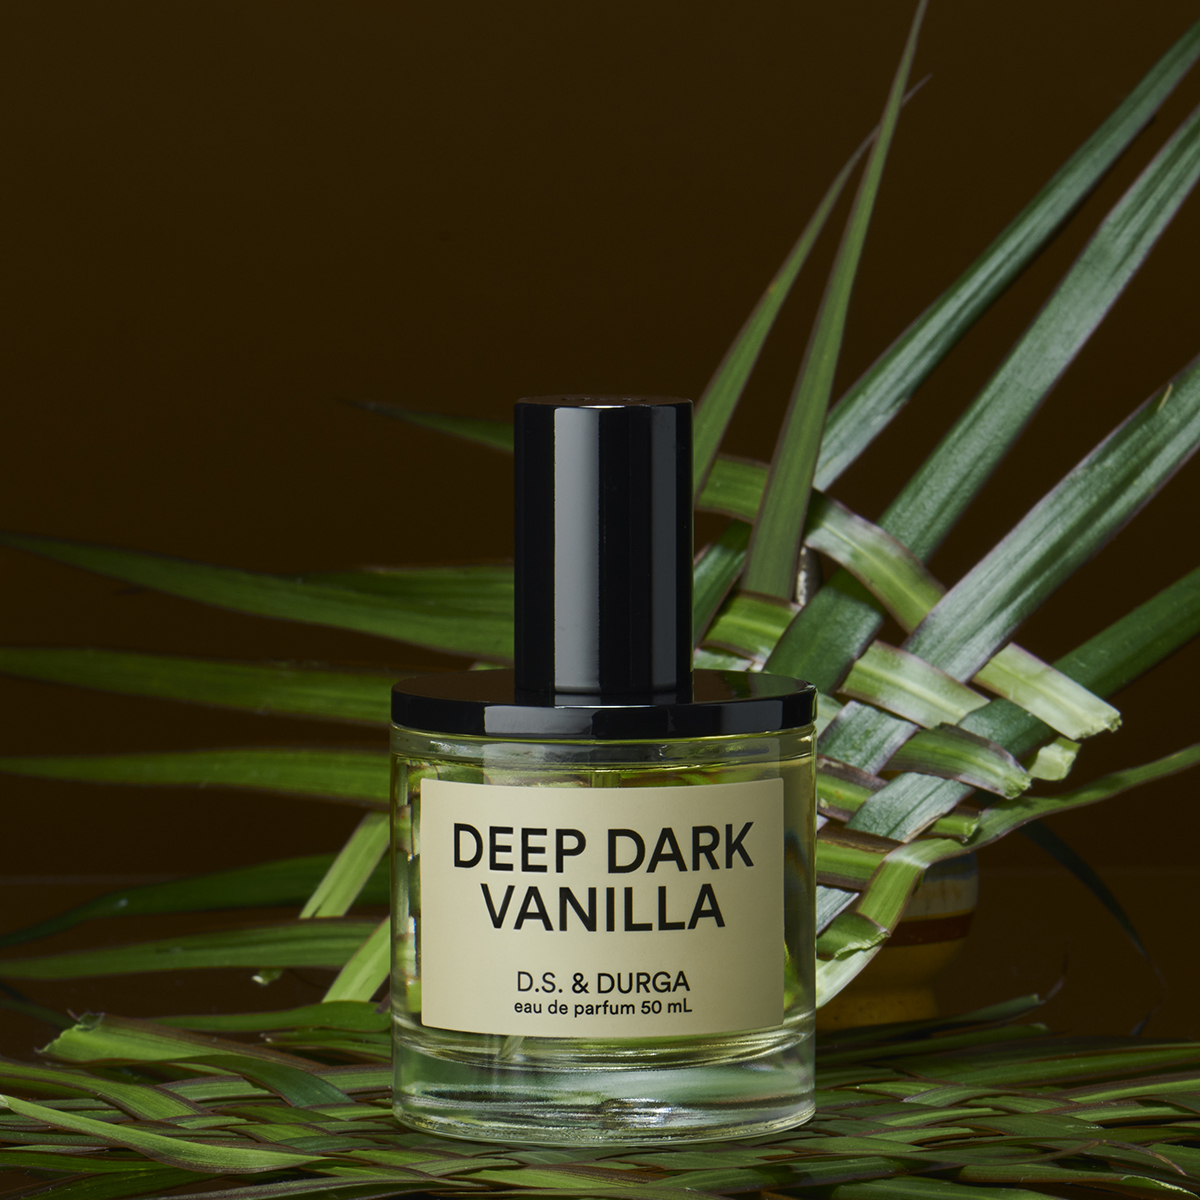 D.S. & DURGA - Deep Dark Vanilla Eau de Parfum